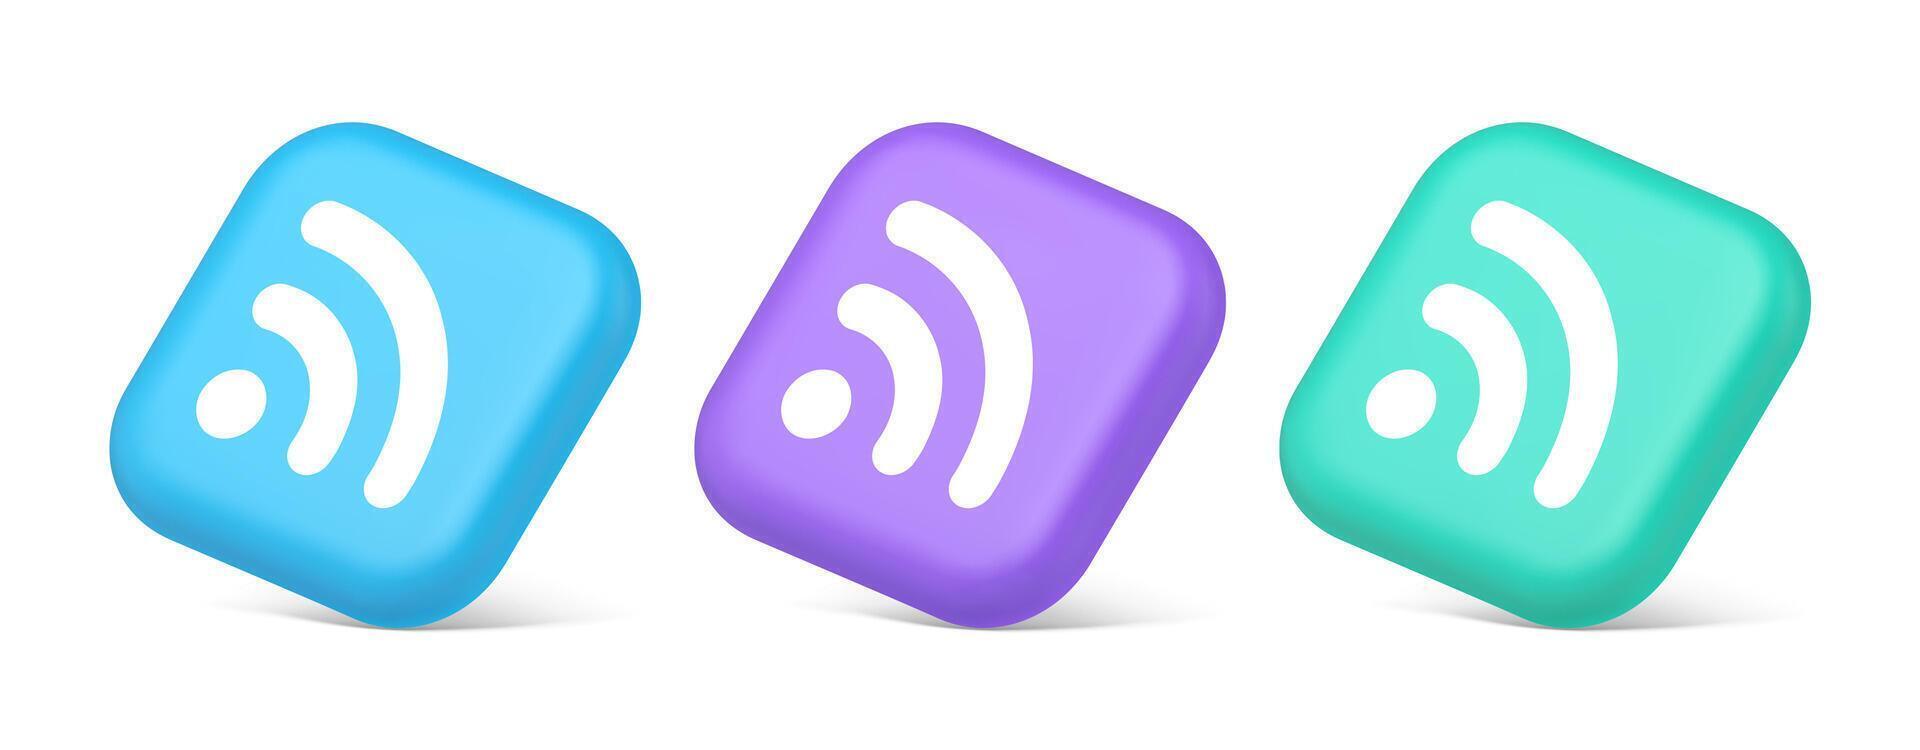 Wifi disponible acceso botón inalámbrico Internet conexión señal 3d realista isométrica icono vector